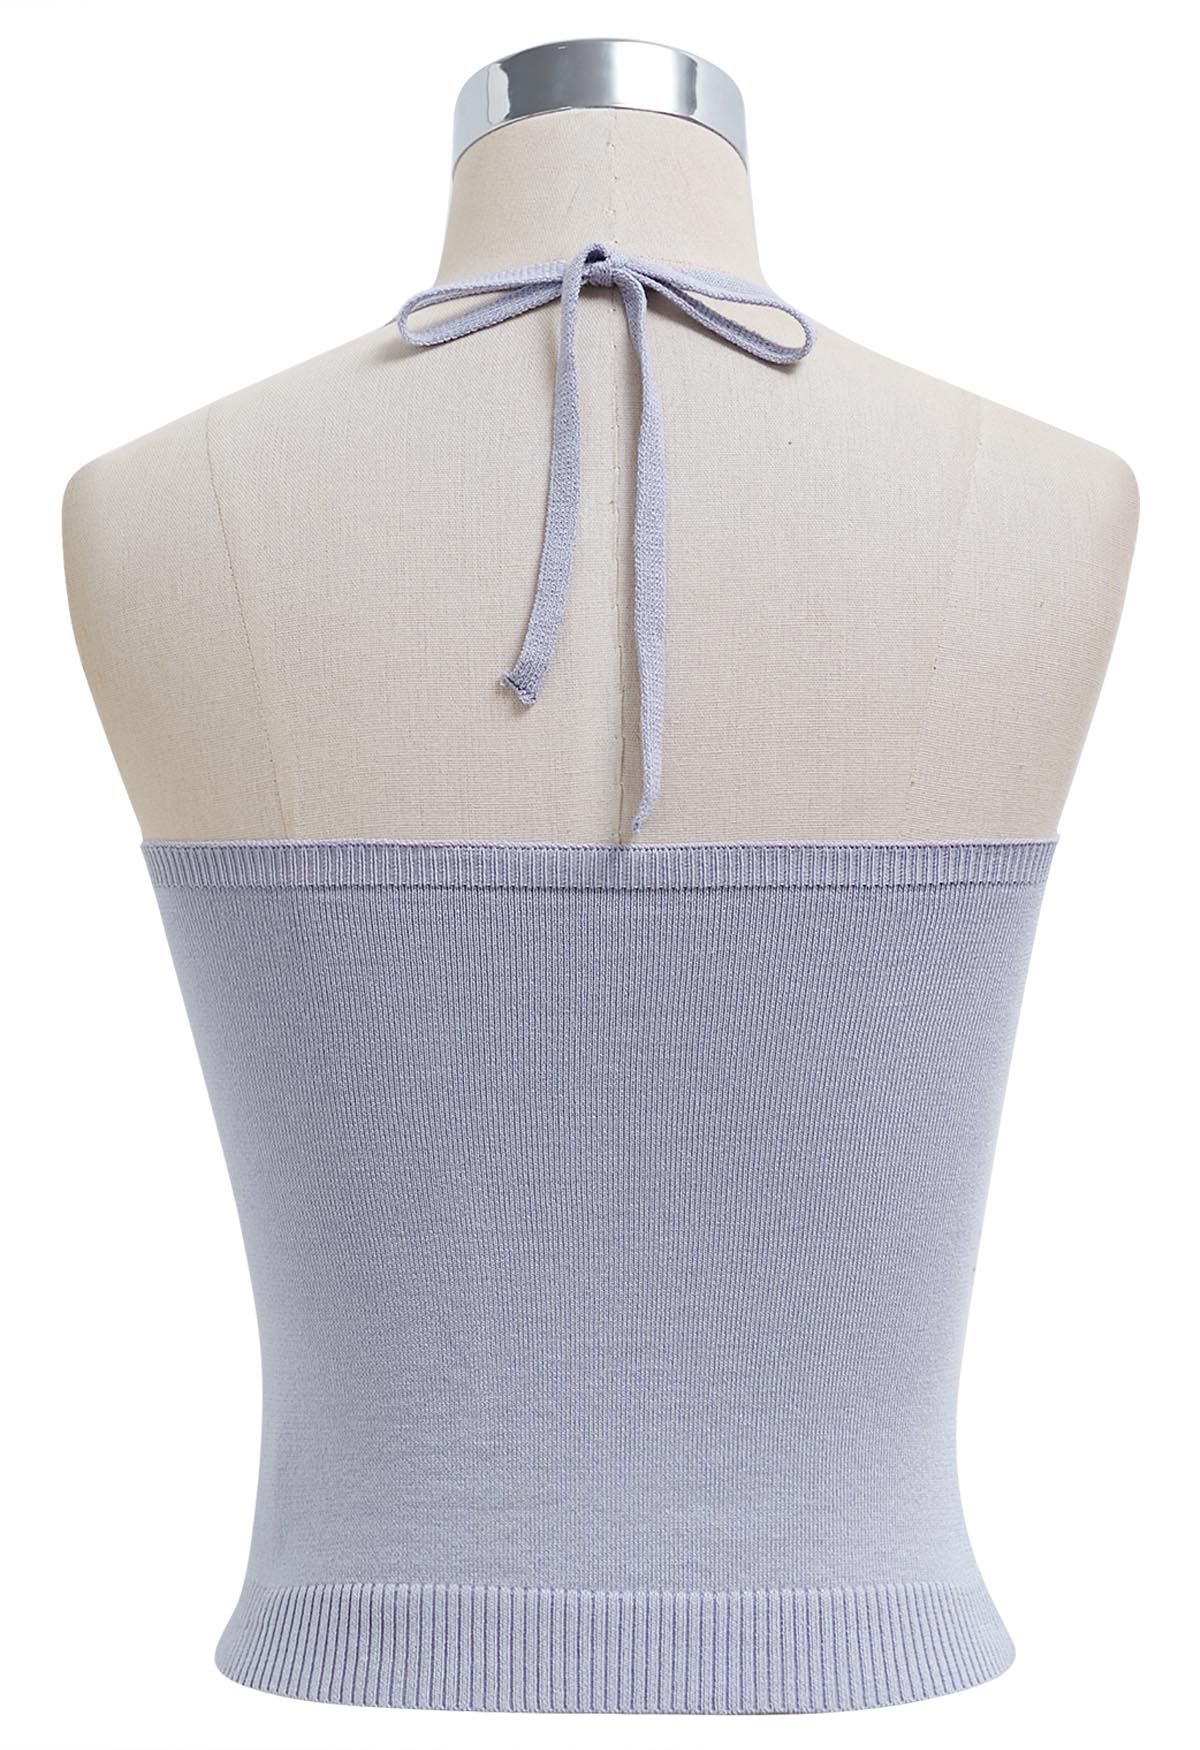 Pintuck Detail Halter Knit Top in Lavender